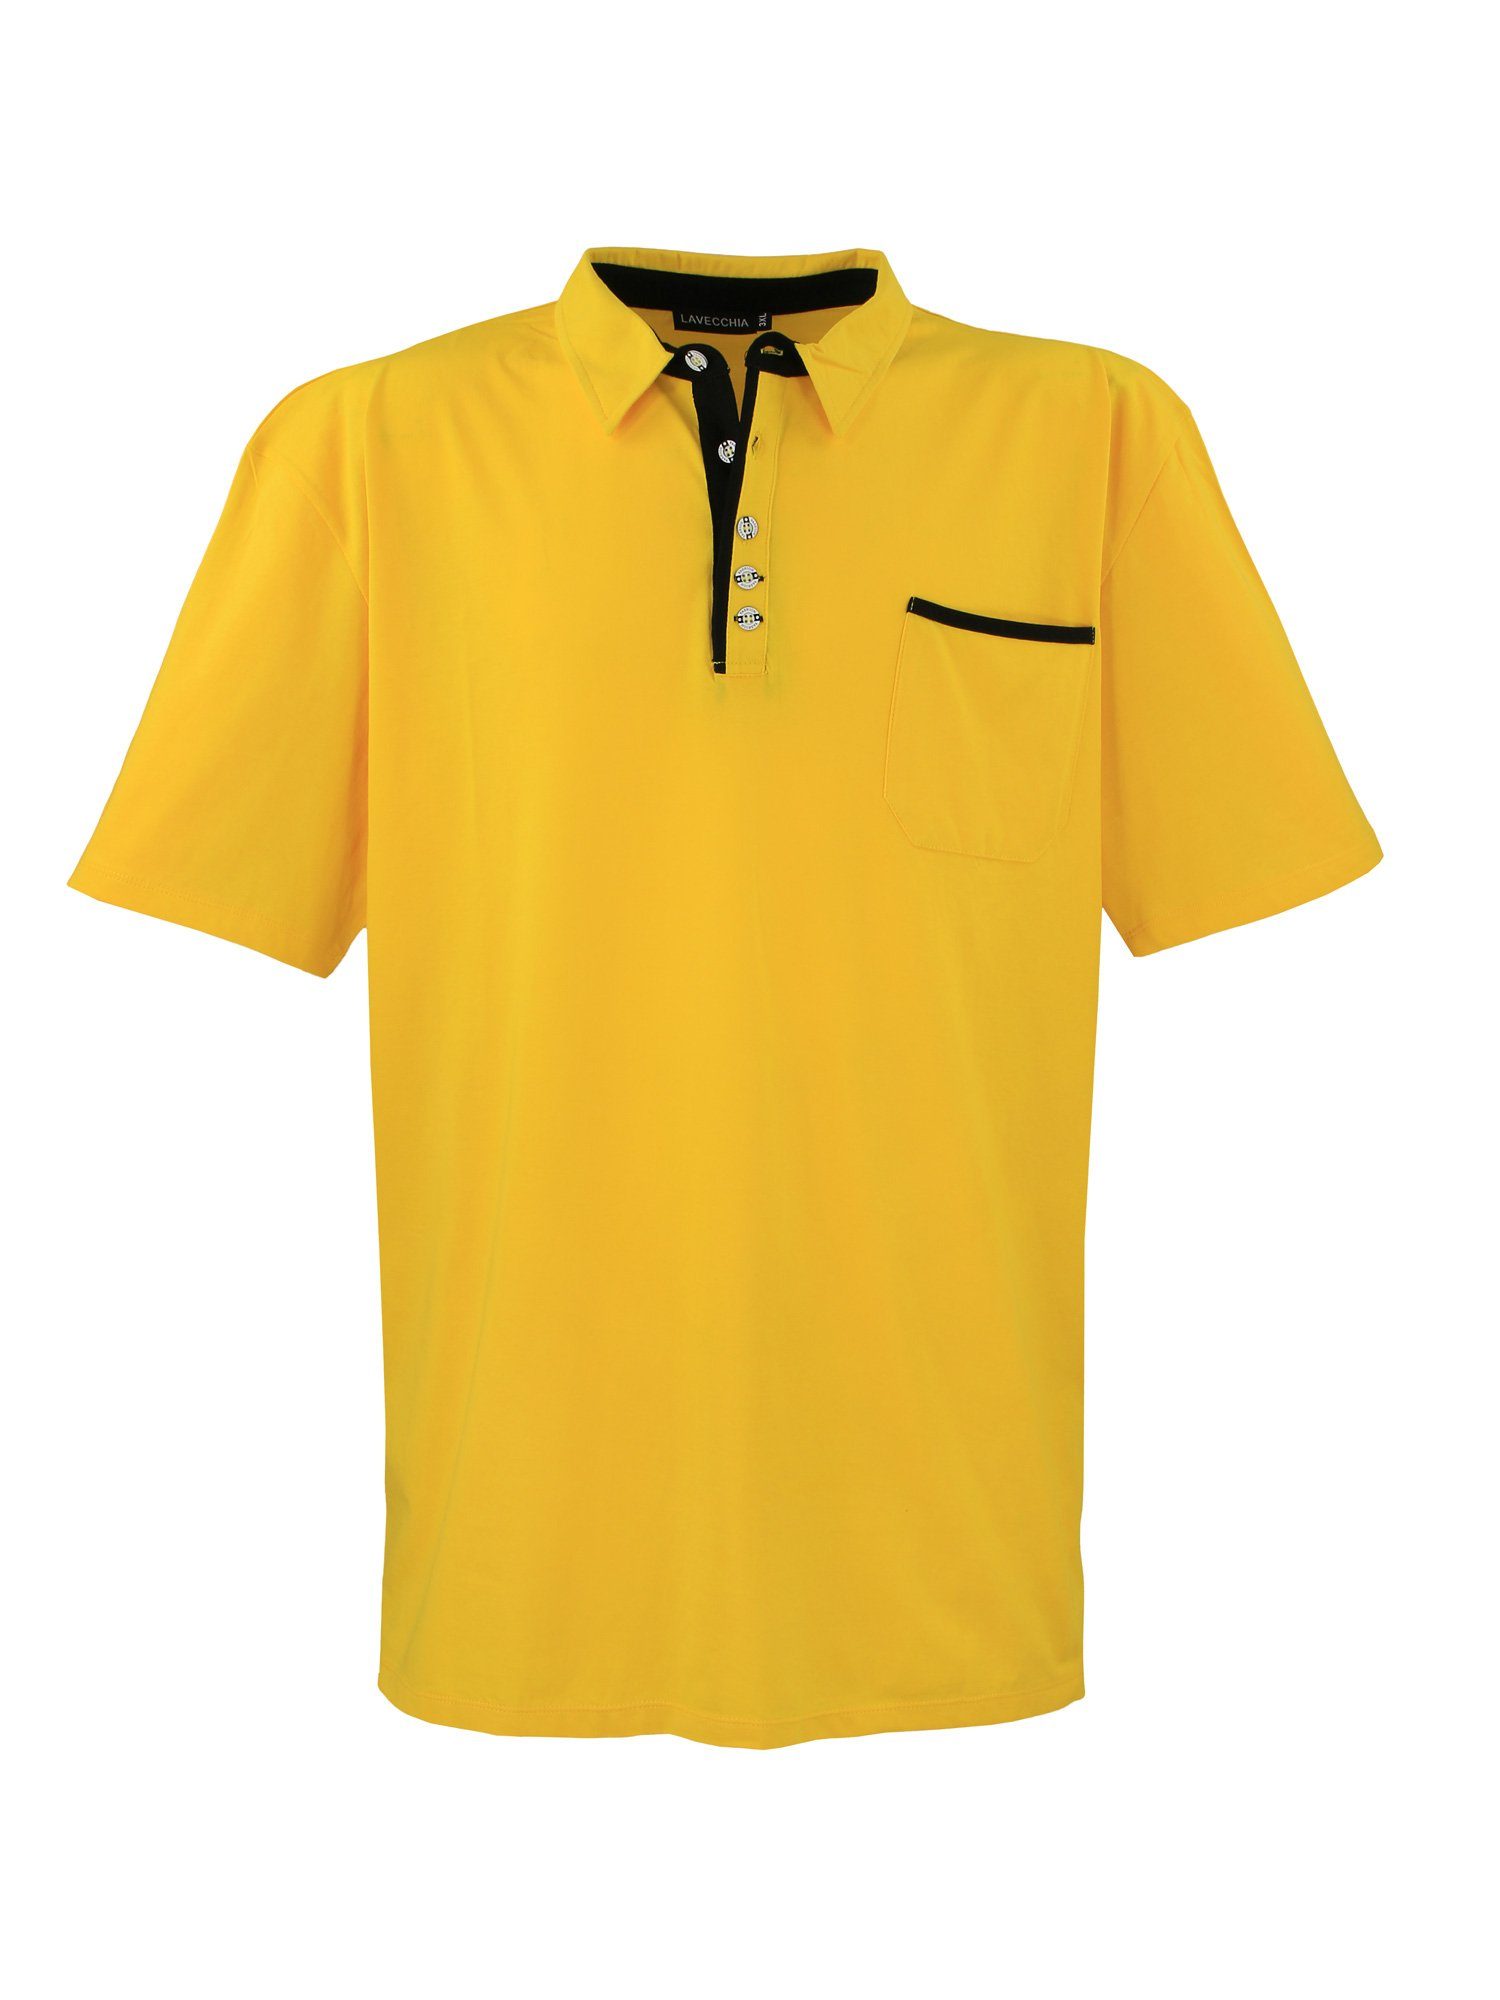 Lavecchia Poloshirt Übergrößen Herren Polo Shirt Shirt Herren LV-1701 Polo gelb